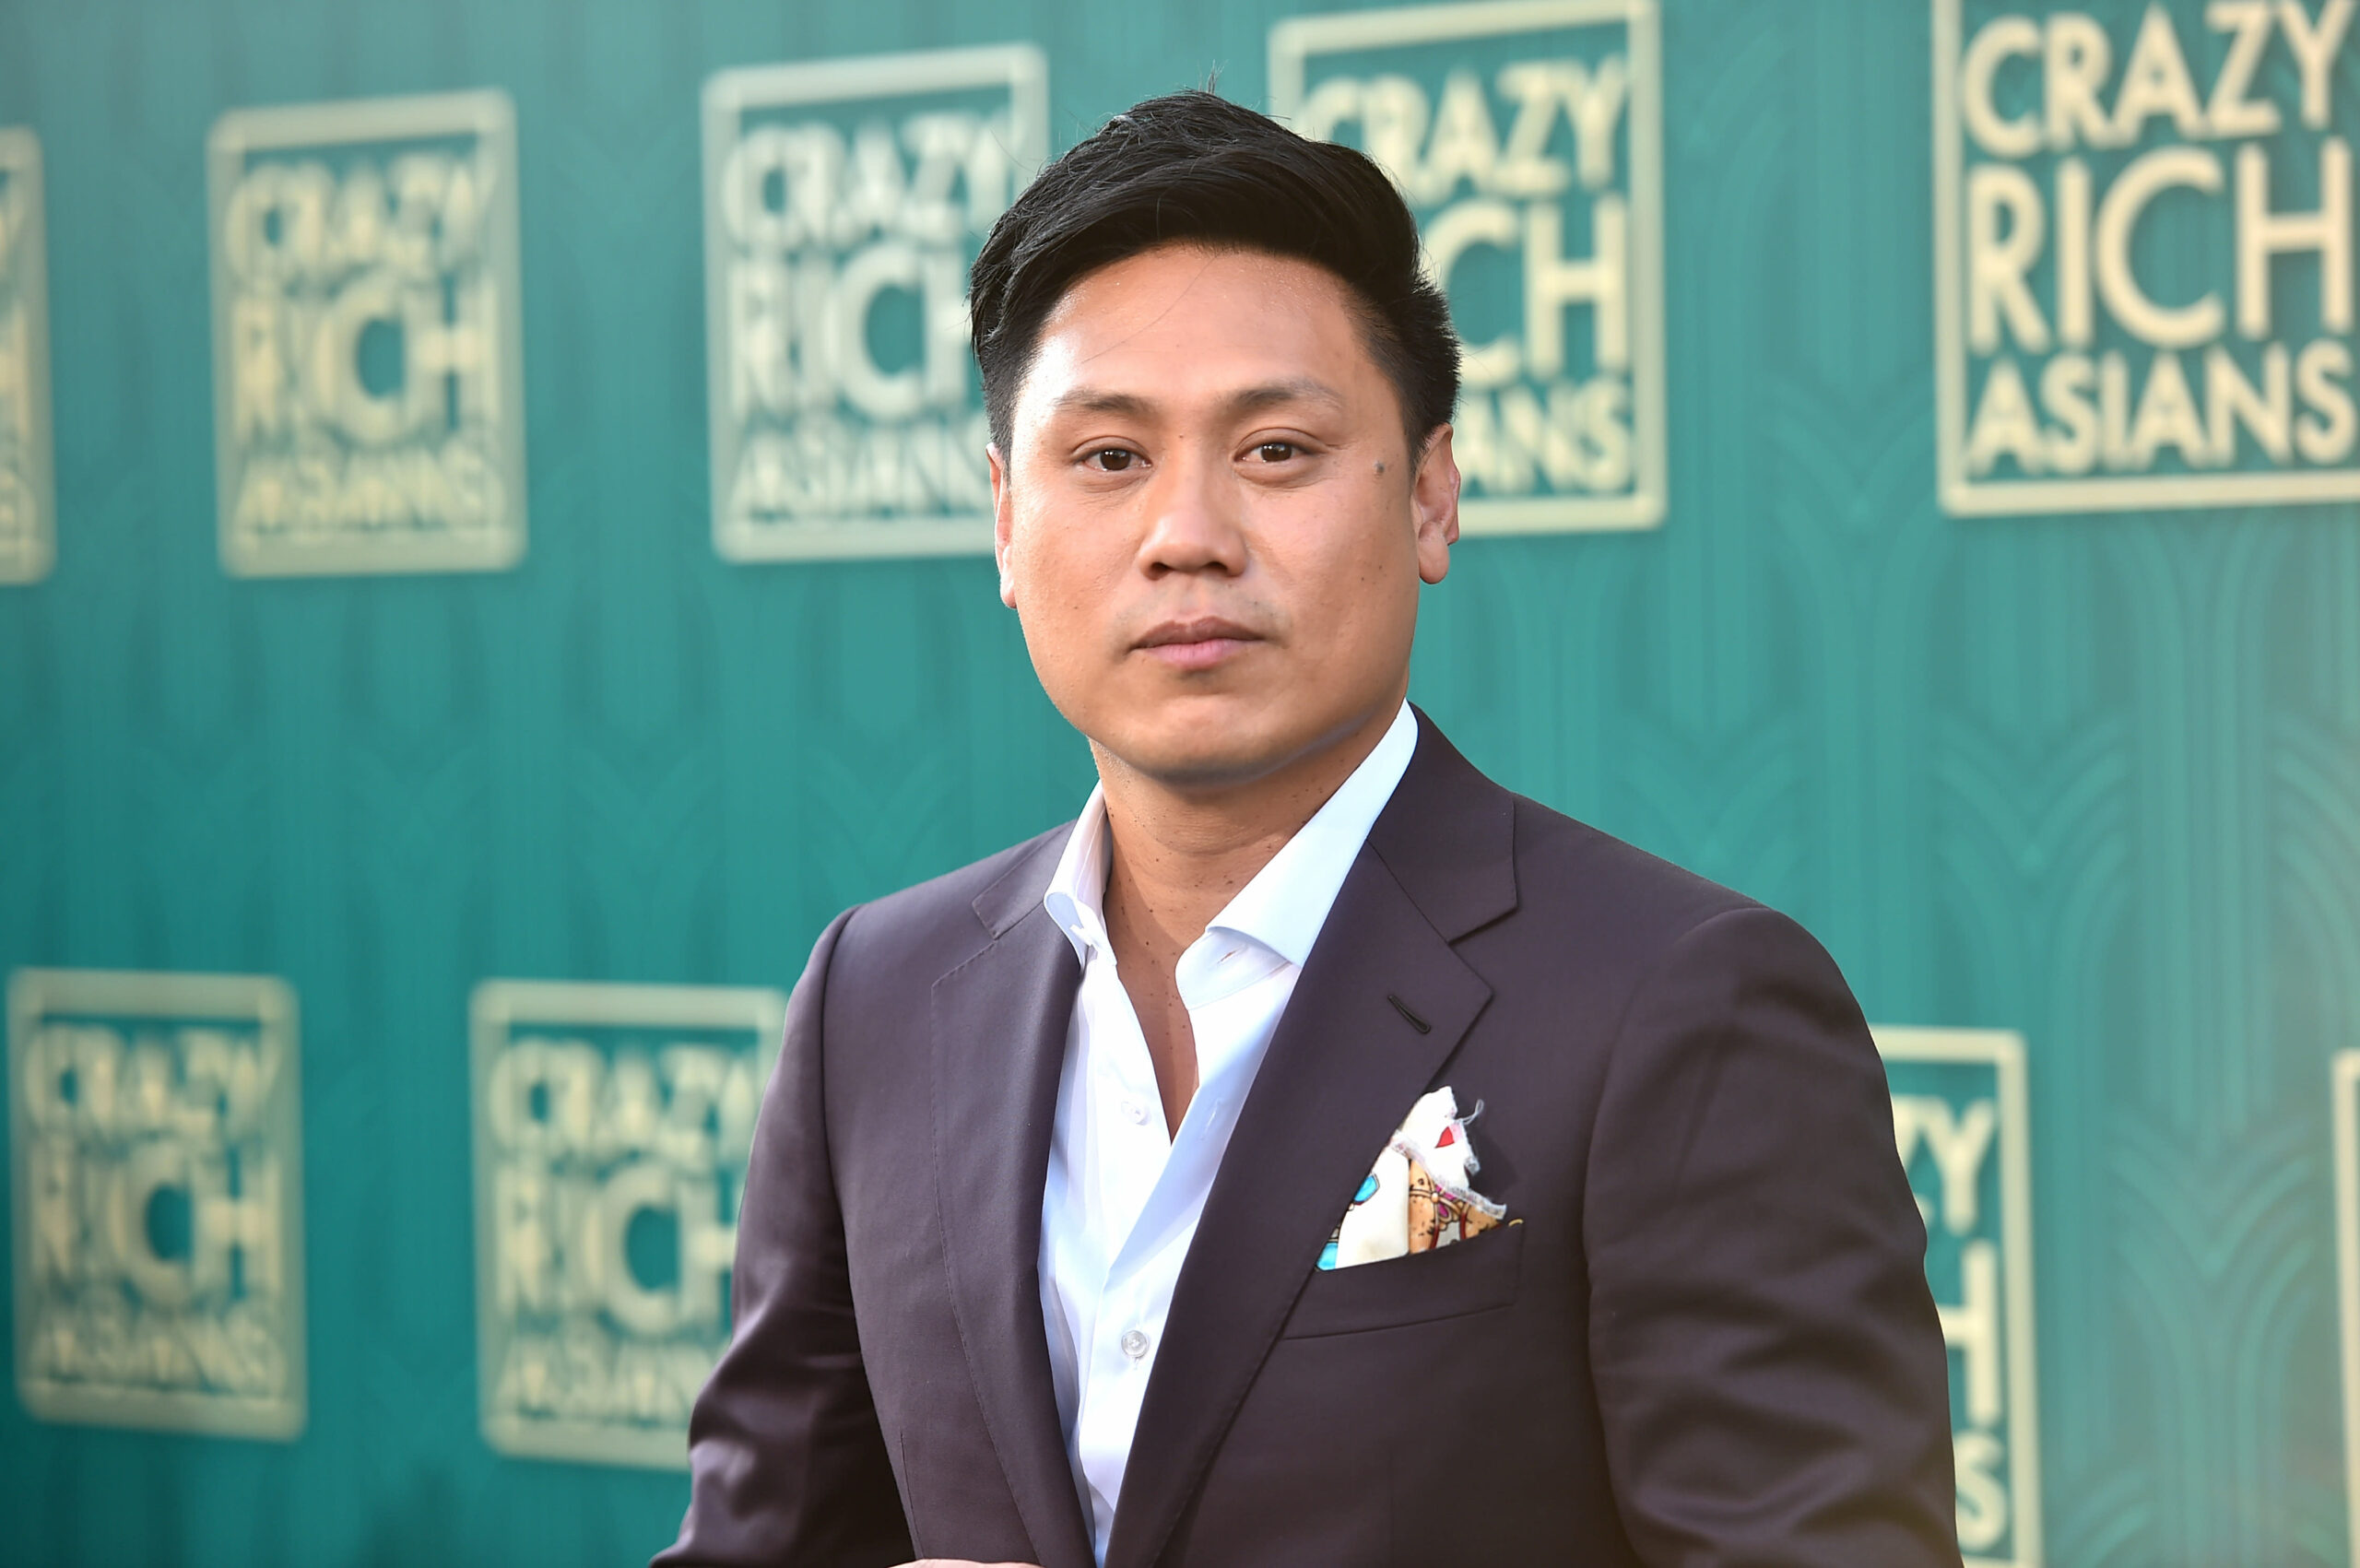 Director Jon M. Chu on Asian illustration in Hollywood